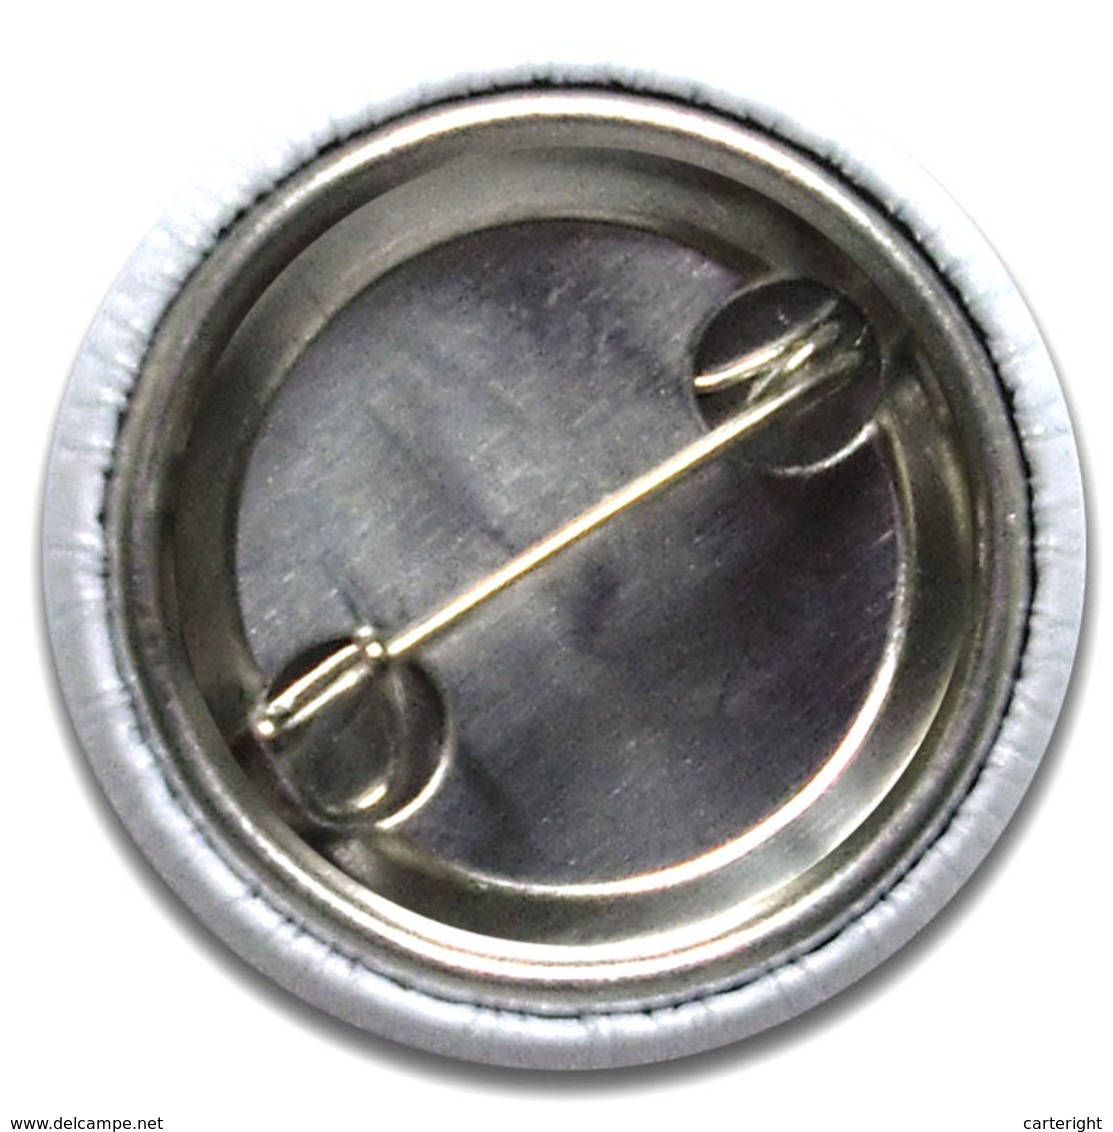 Eleanor Parker movie film fan ART BADGE BUTTON PIN SET 2 (1inch/25mm diameter) 70 DIFF